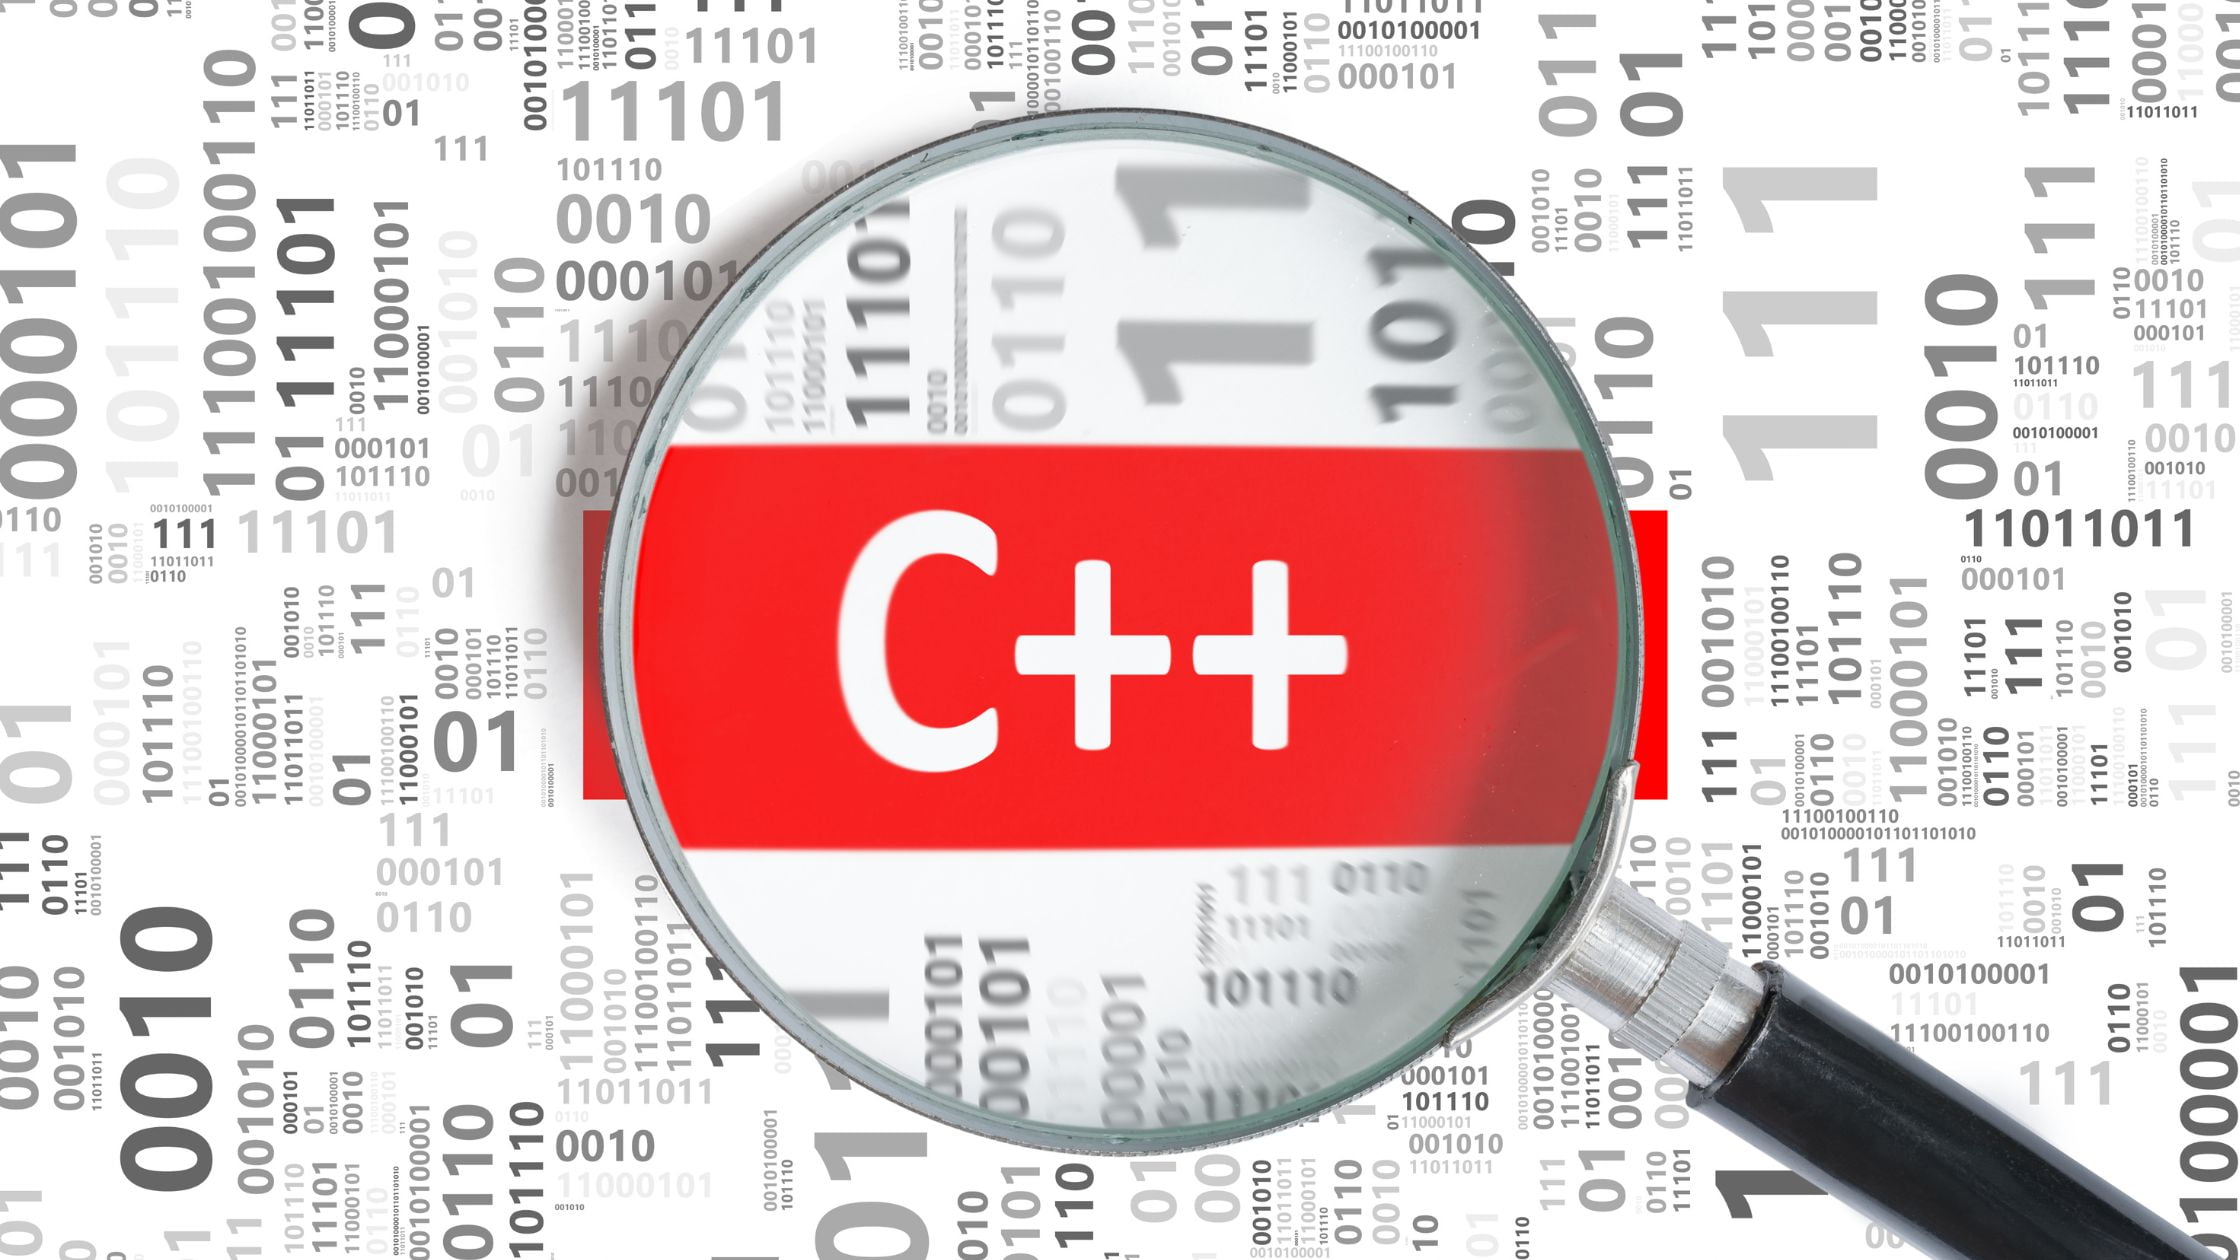 Web Framework C++